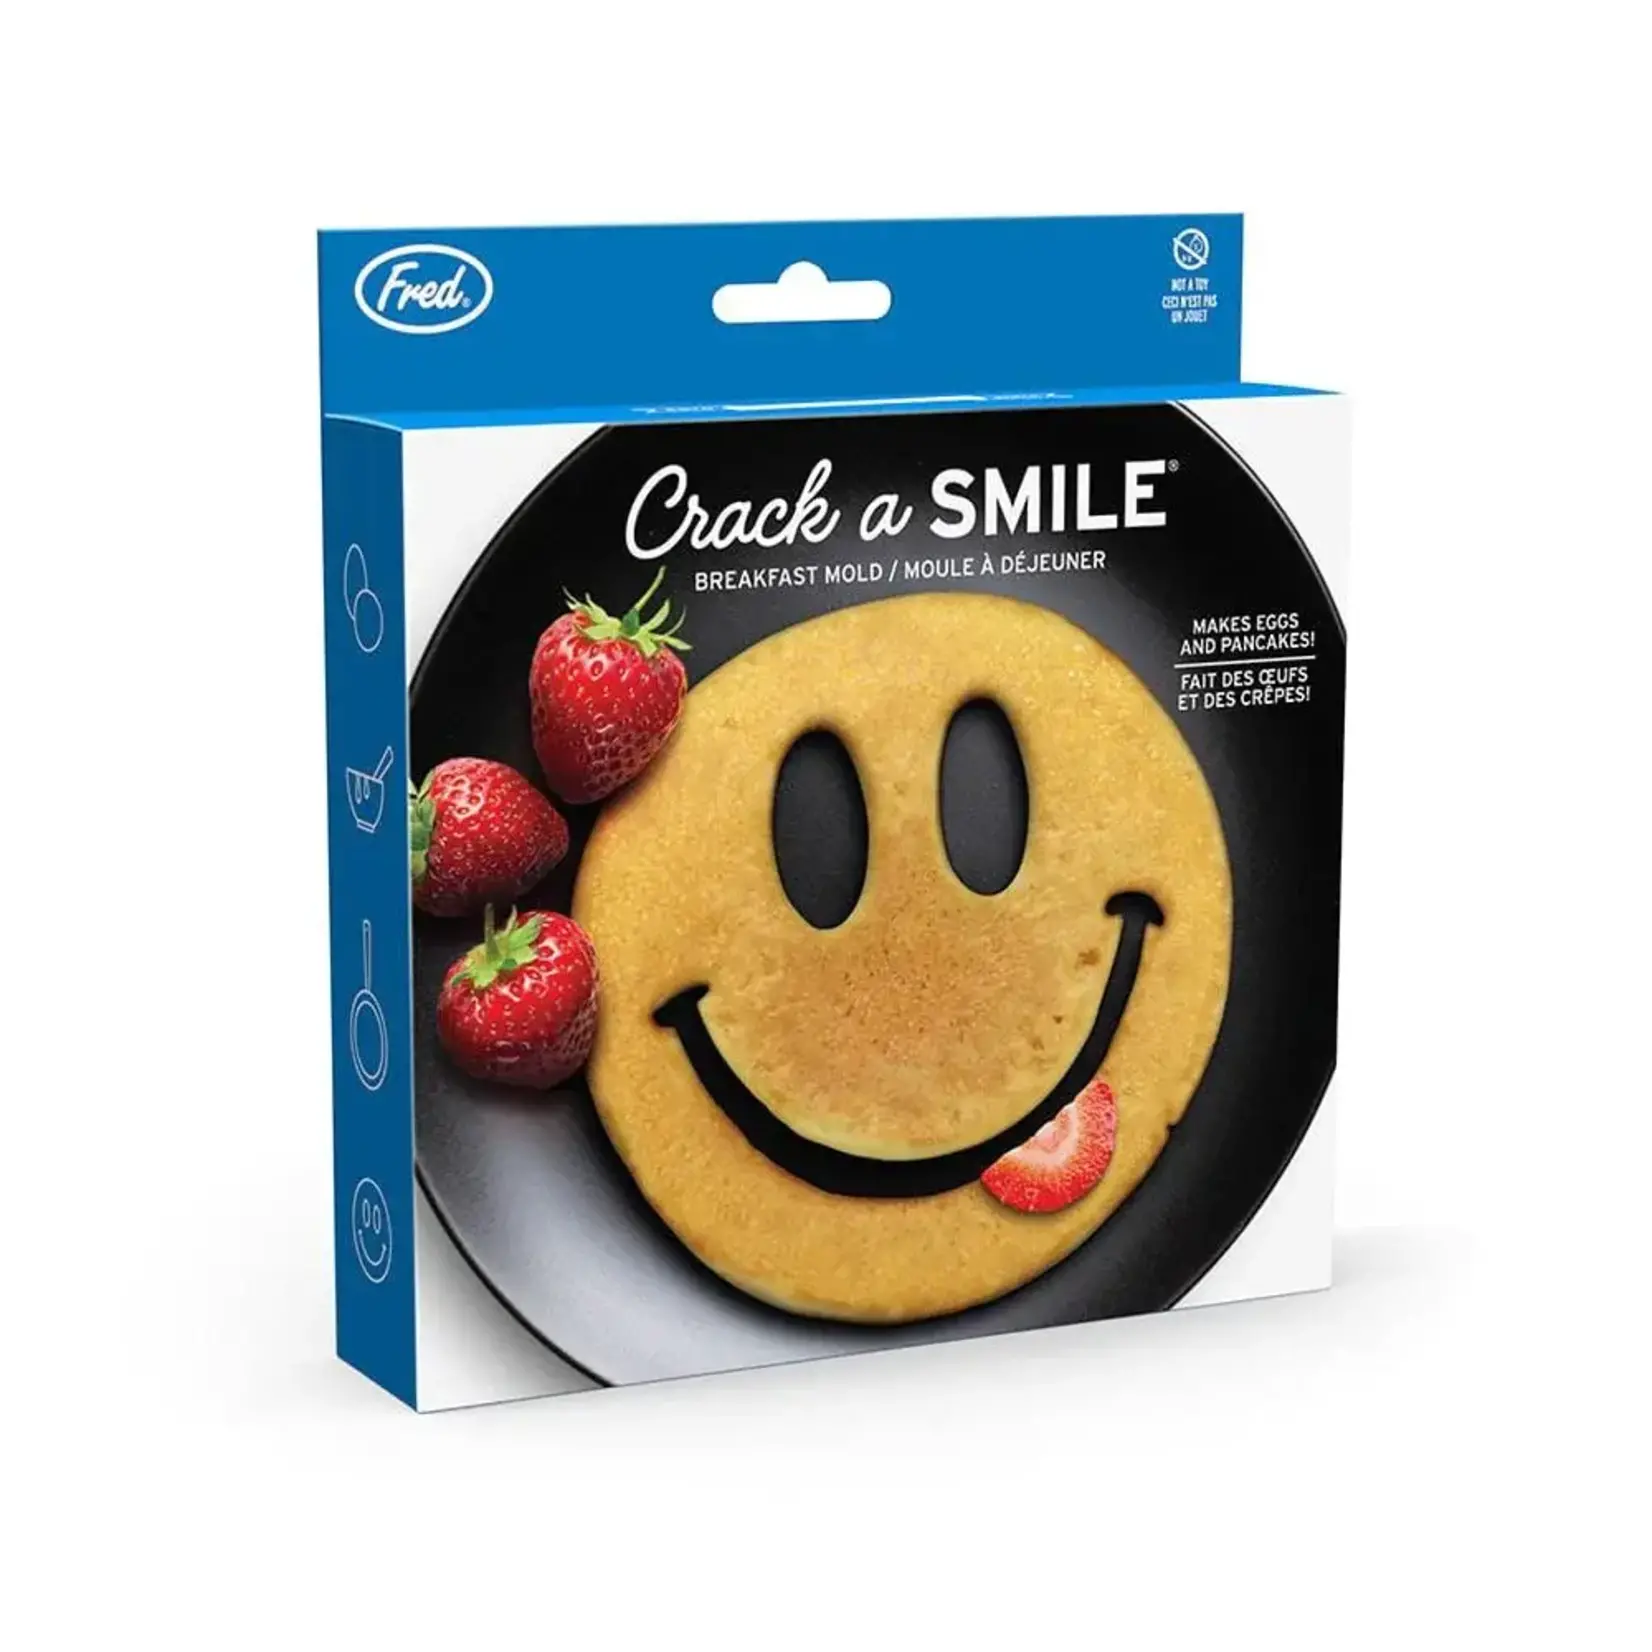 CRACK A SMILE BREAKFAST MOLD